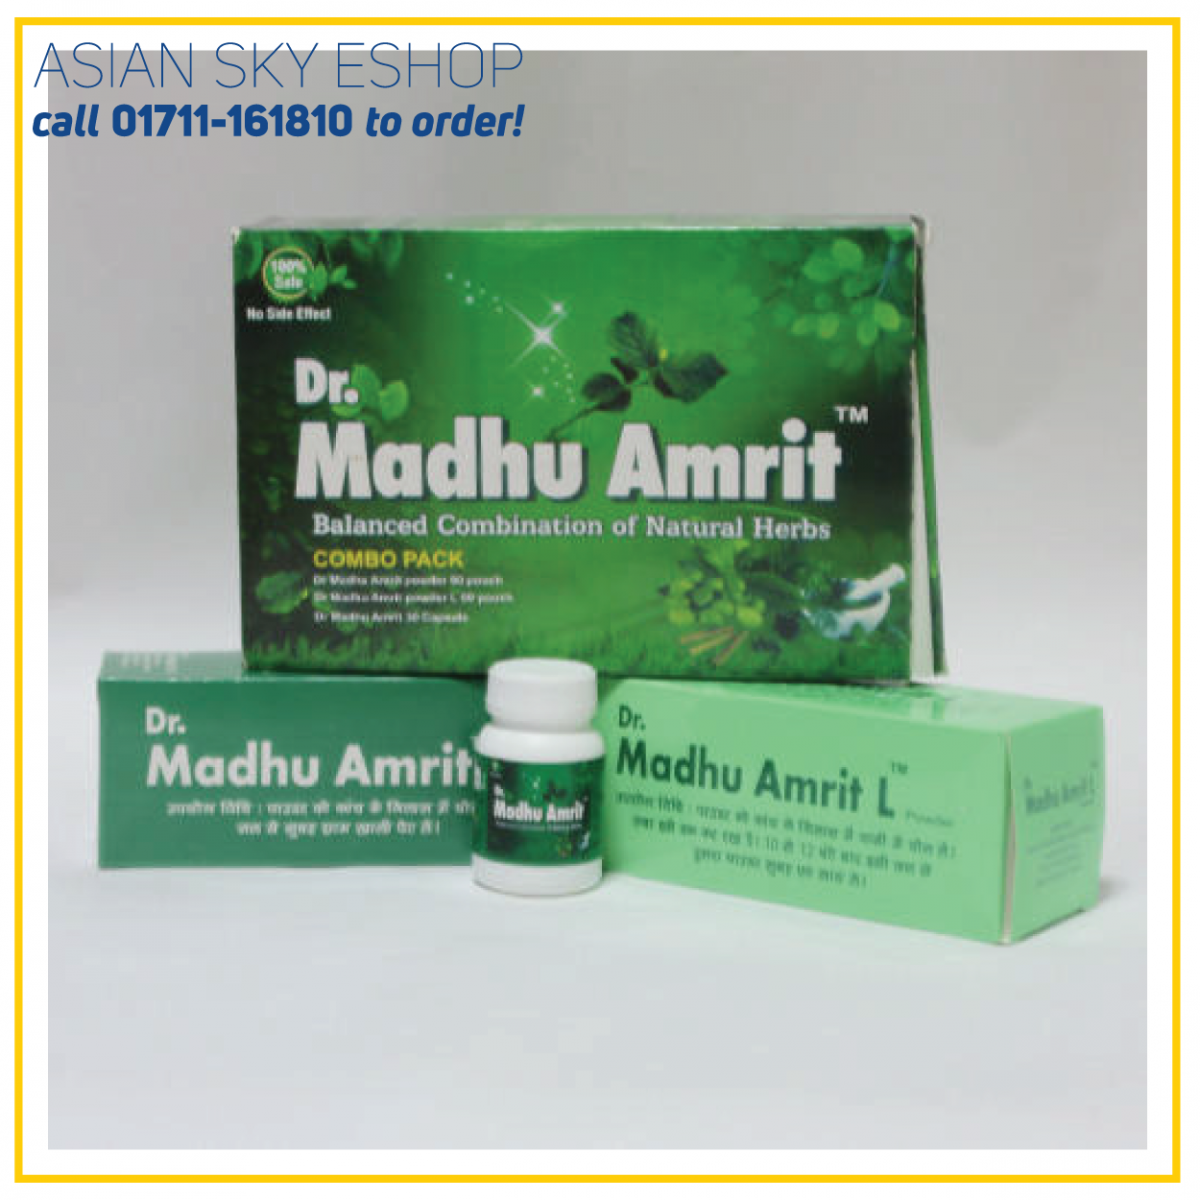 Dr. Madhu Amrit